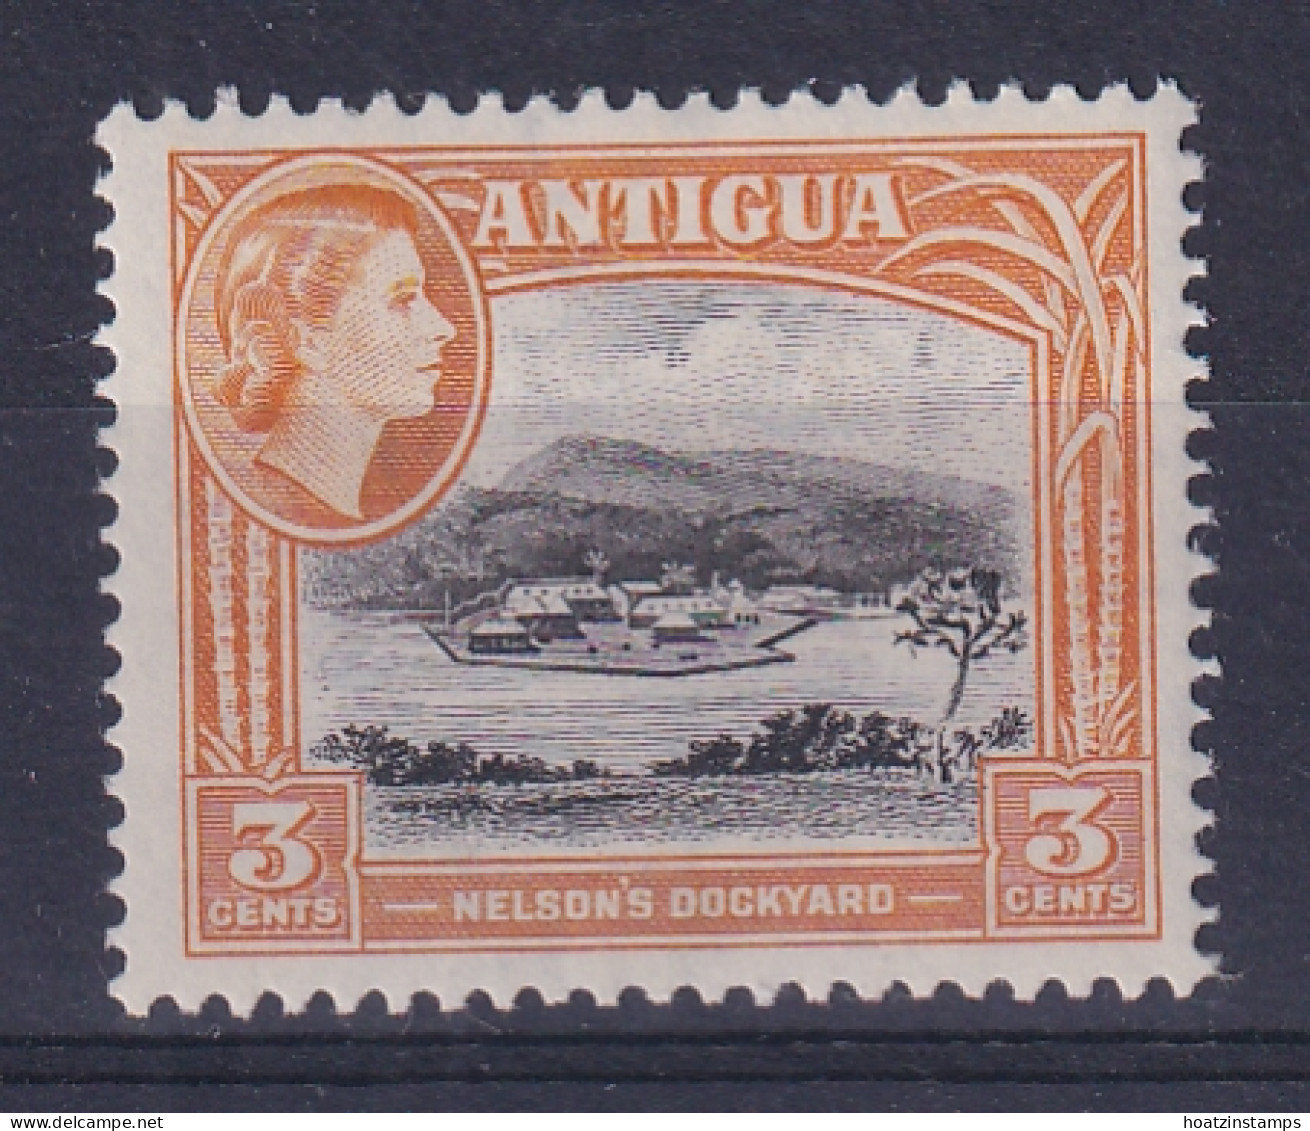 Antigua: 1963/65   QE II - Pictorial     SG152    3c   [Wmk: Block Crown CA]   MH - 1960-1981 Autonomía Interna